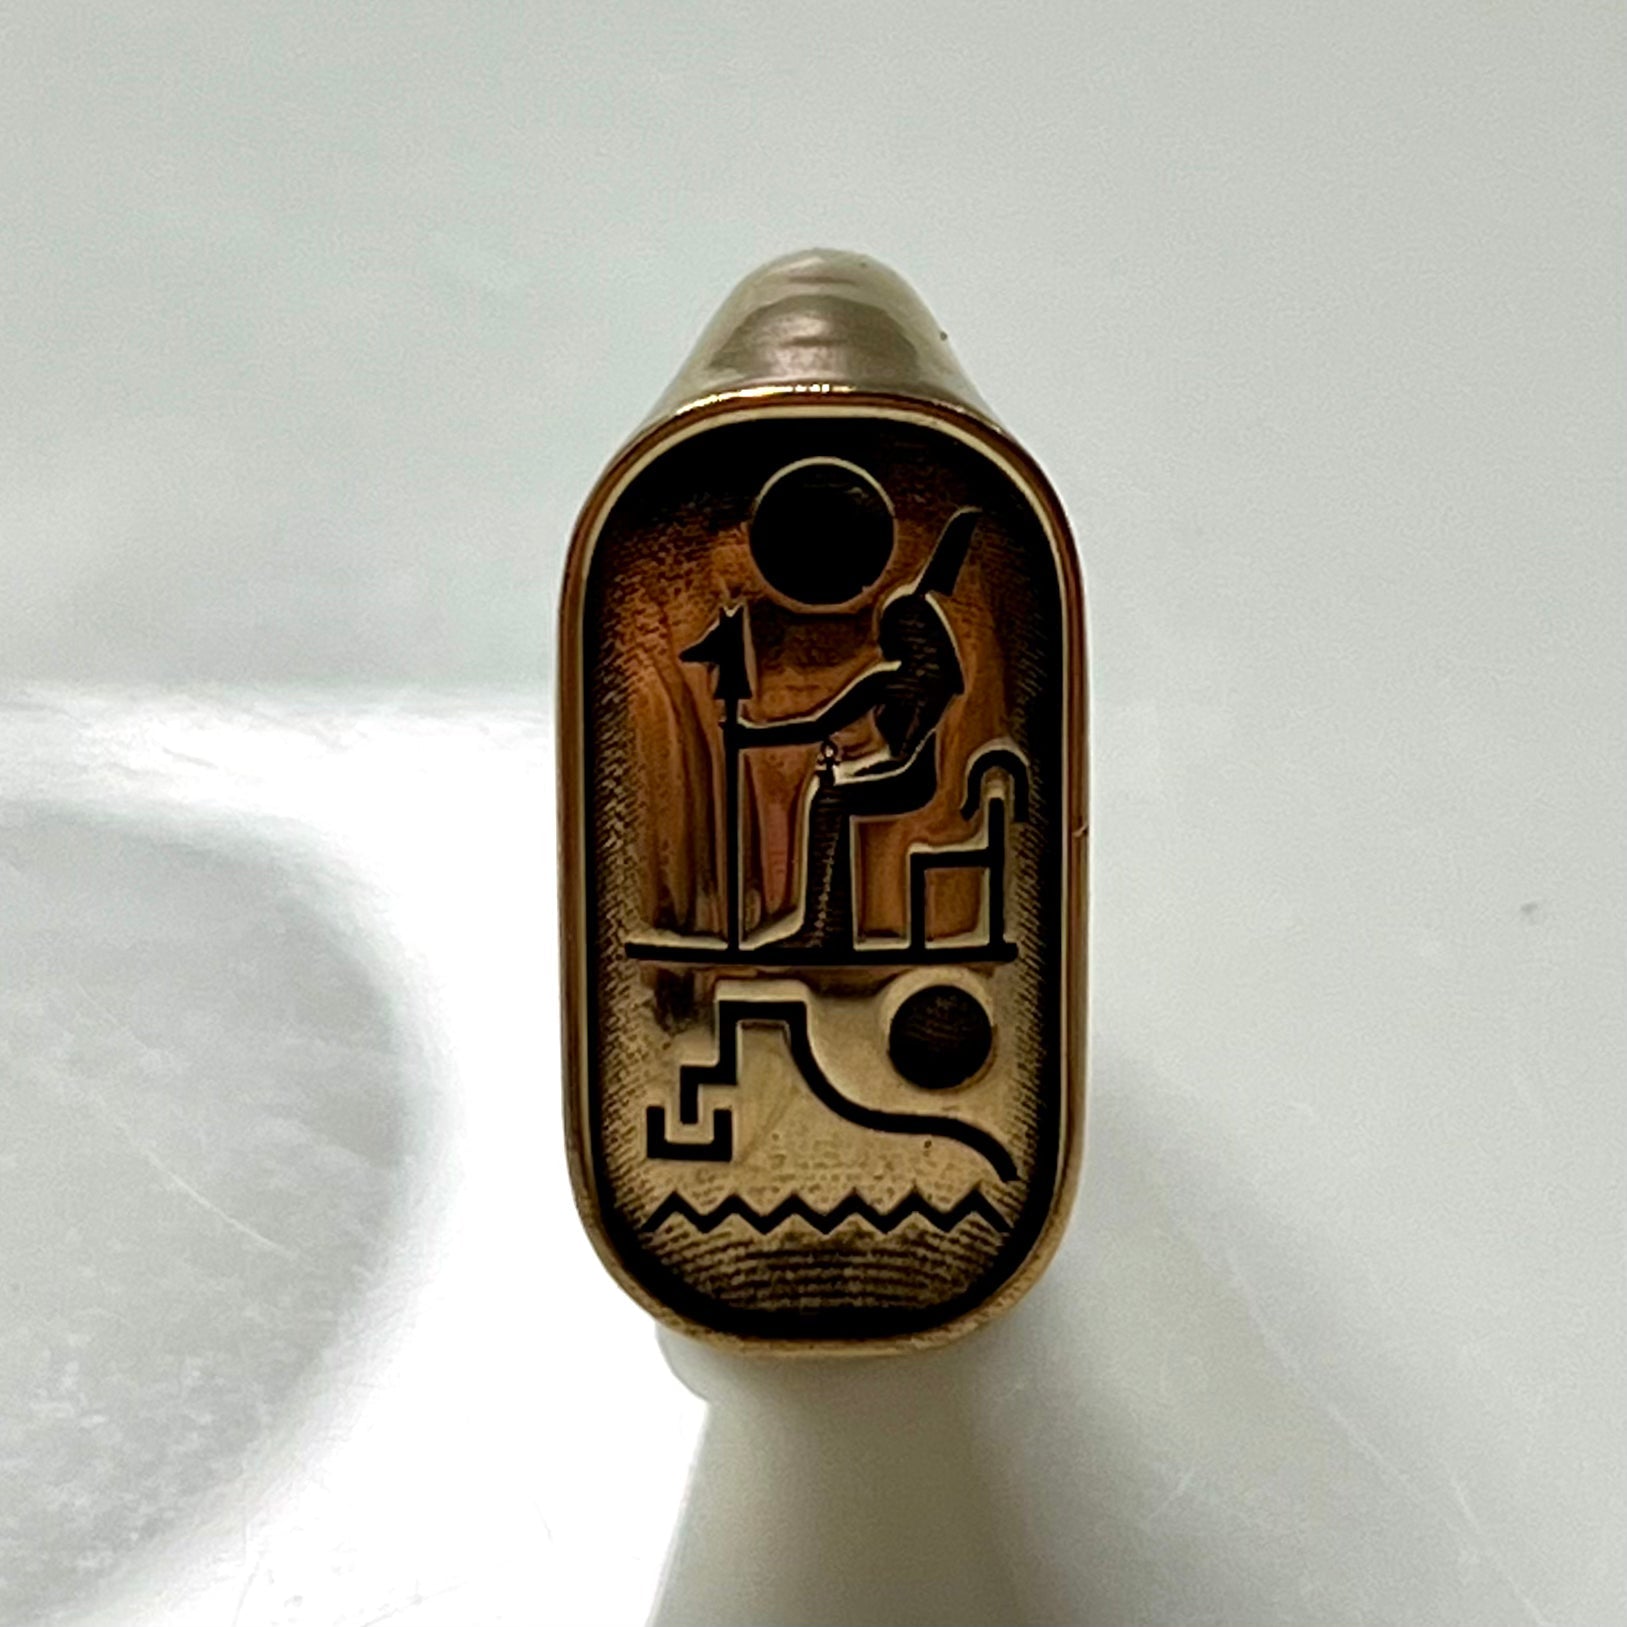 Ramses II Cartouche Ring - Brass